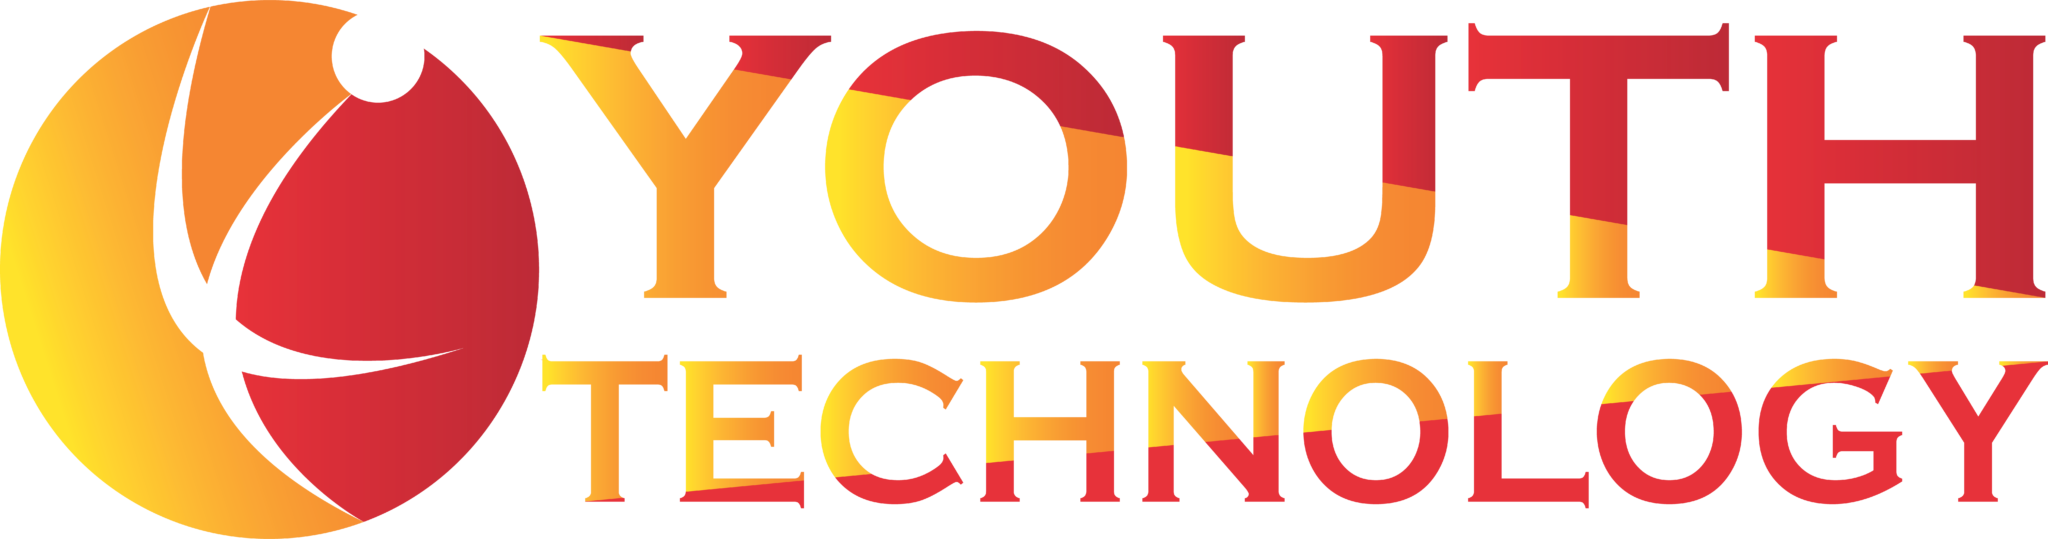 Youth Technology logo